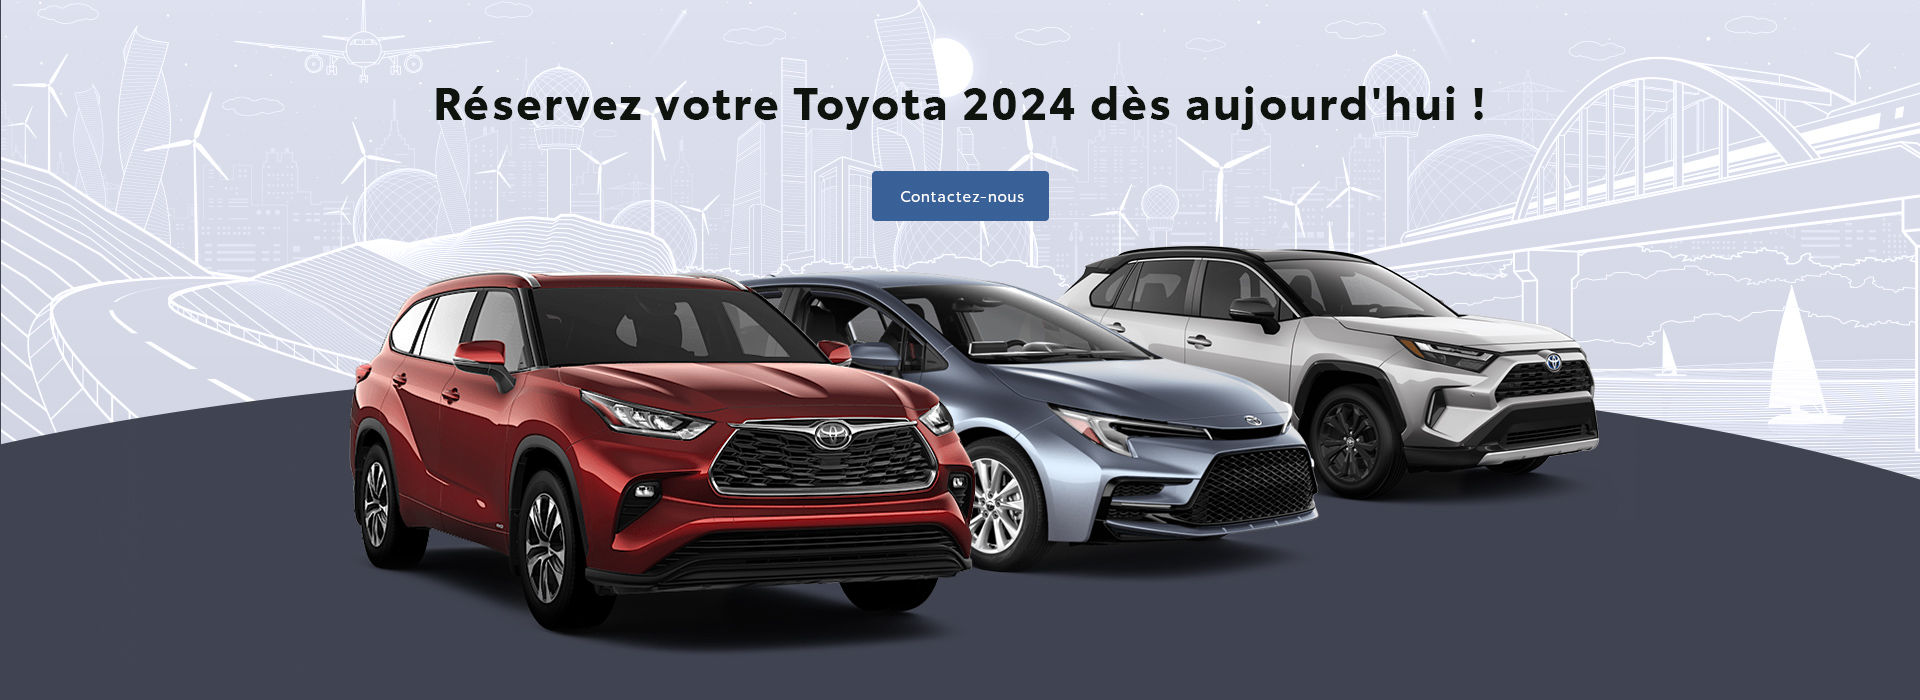 Modeles Toyota 2024